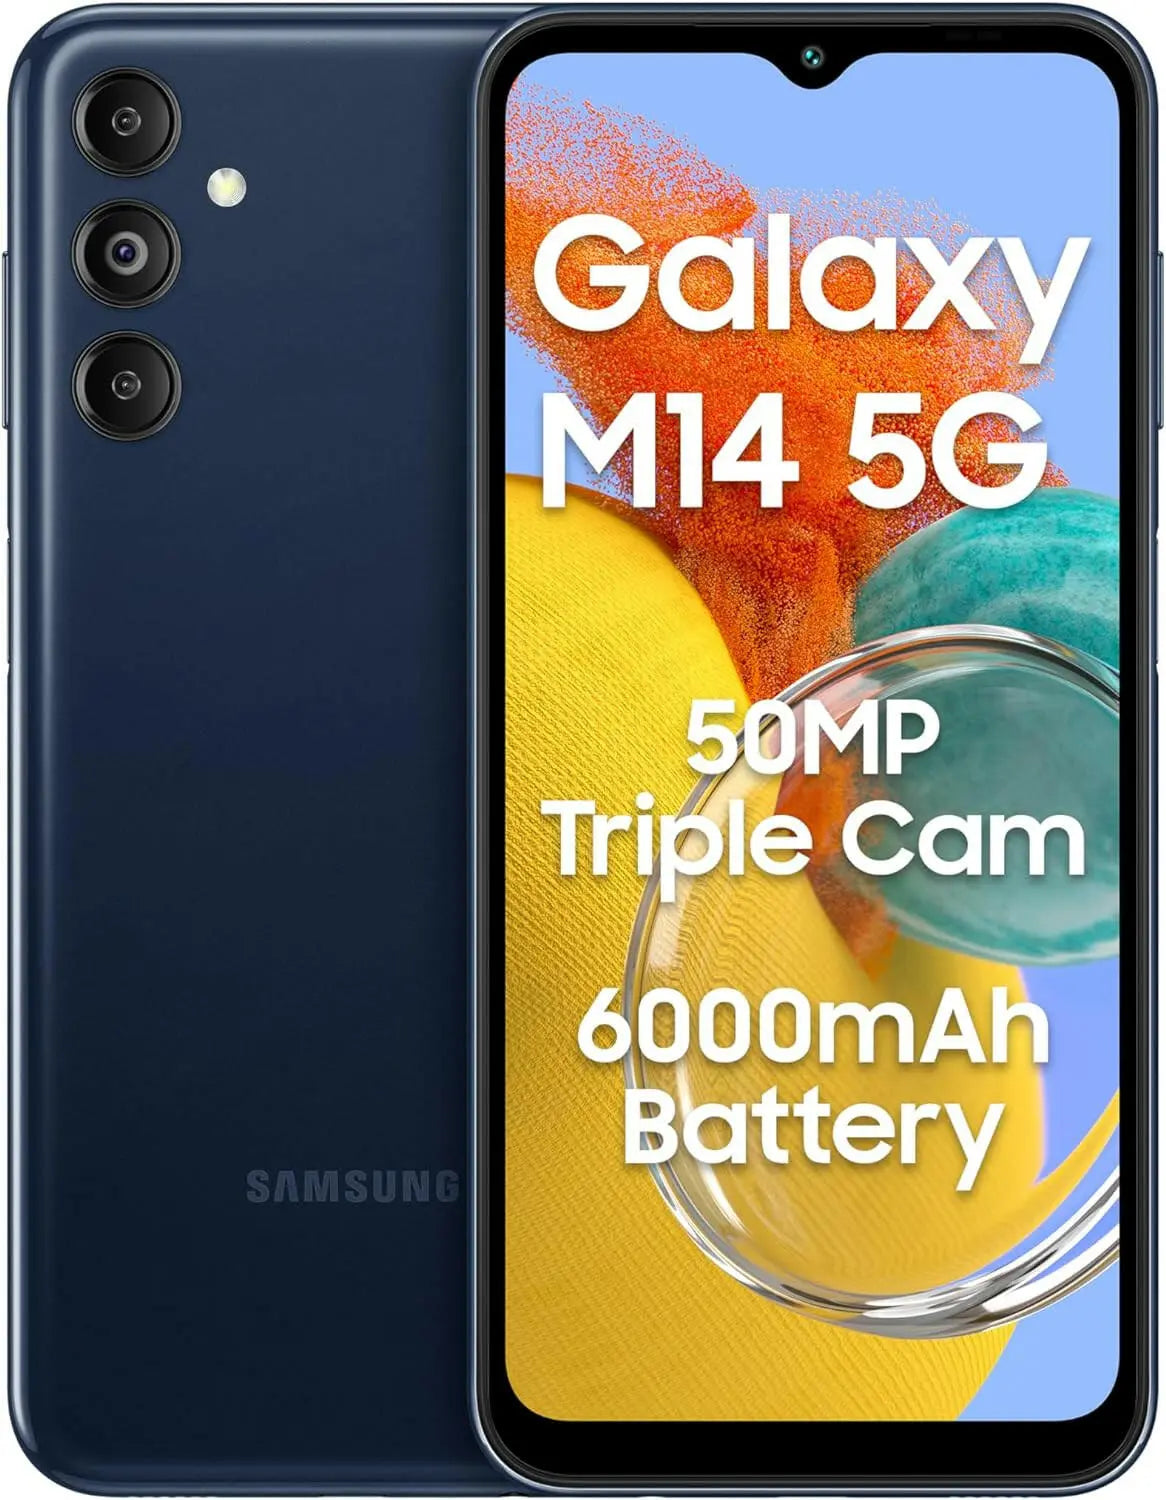 SAMSUNG Galaxy M14 5G (Smoky Teal, 6GB, 128GB Storage) | 50MP Triple Cam | 6000 mAh Battery | 5nm Octa-Core Processor | 12GB RAM with RAM Plus